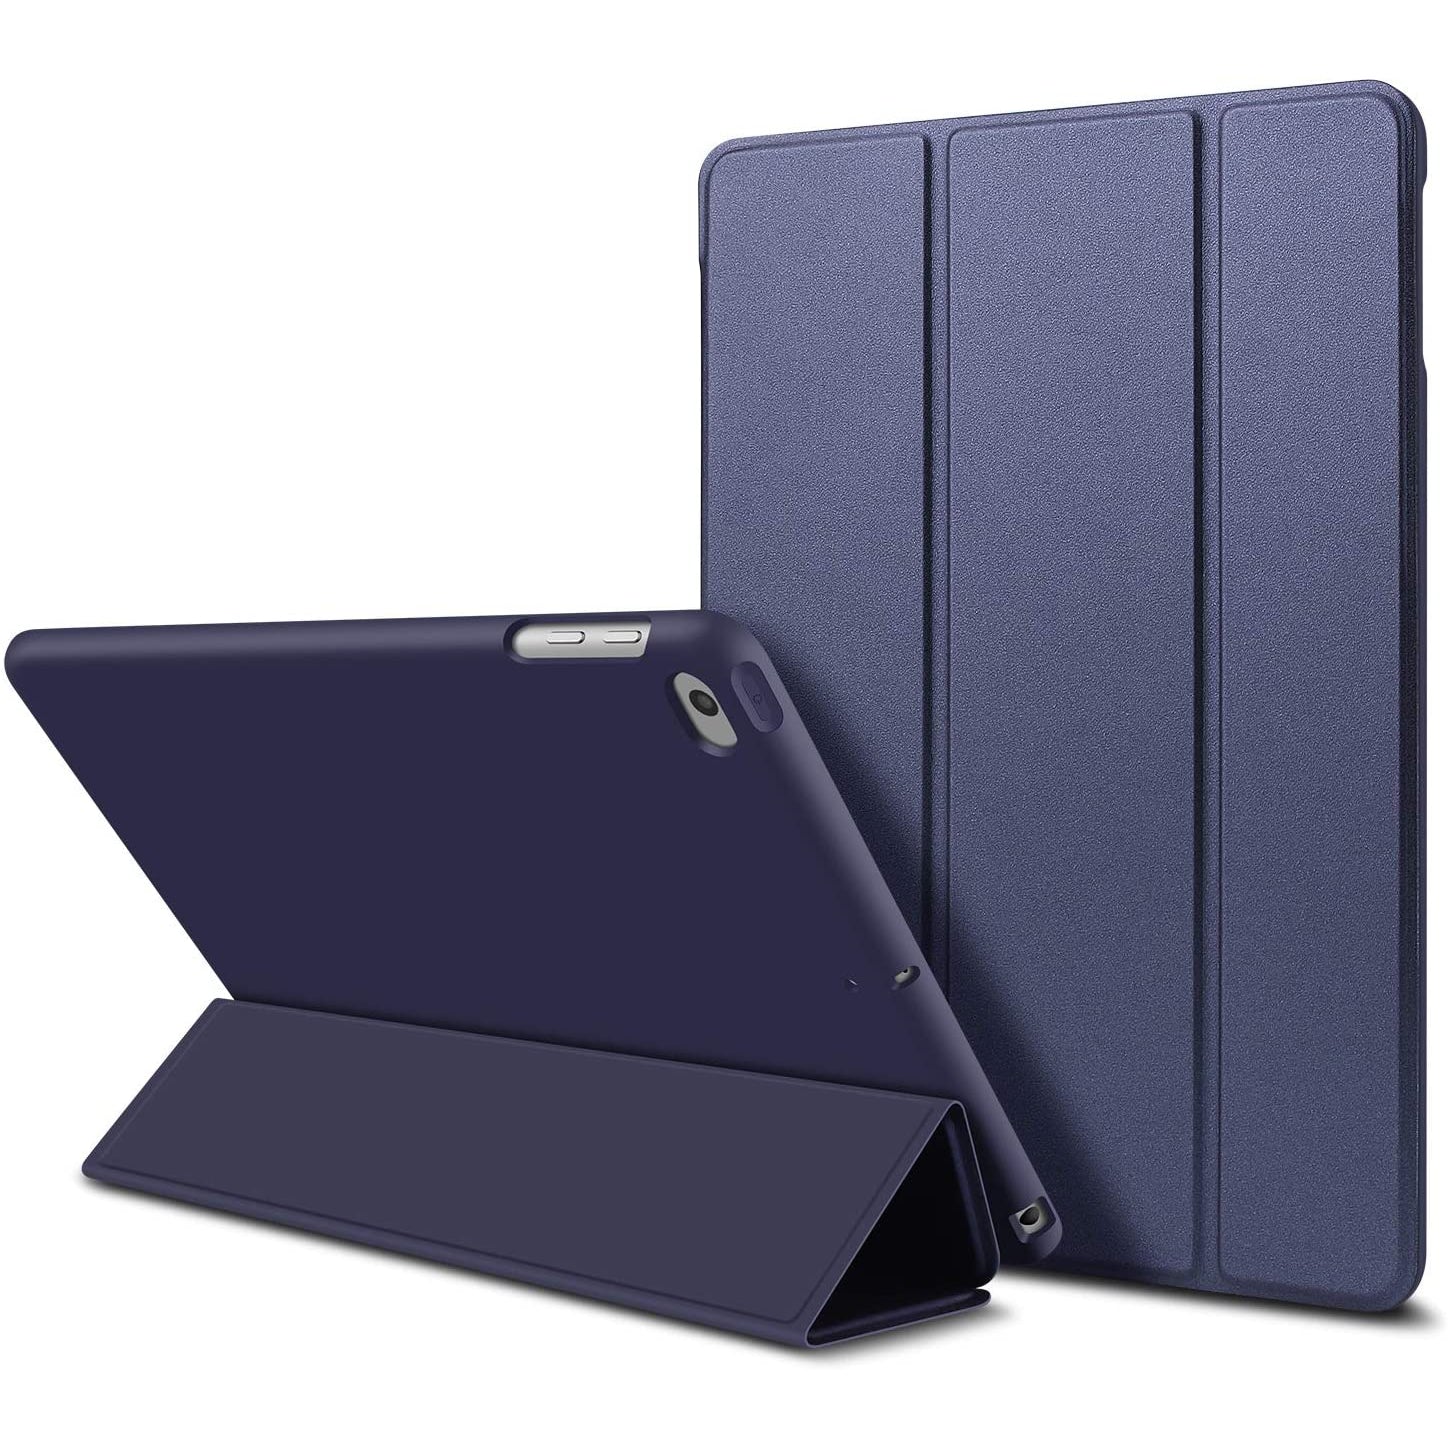 Goojodoq iPad Air 1 Case - Dark Blue